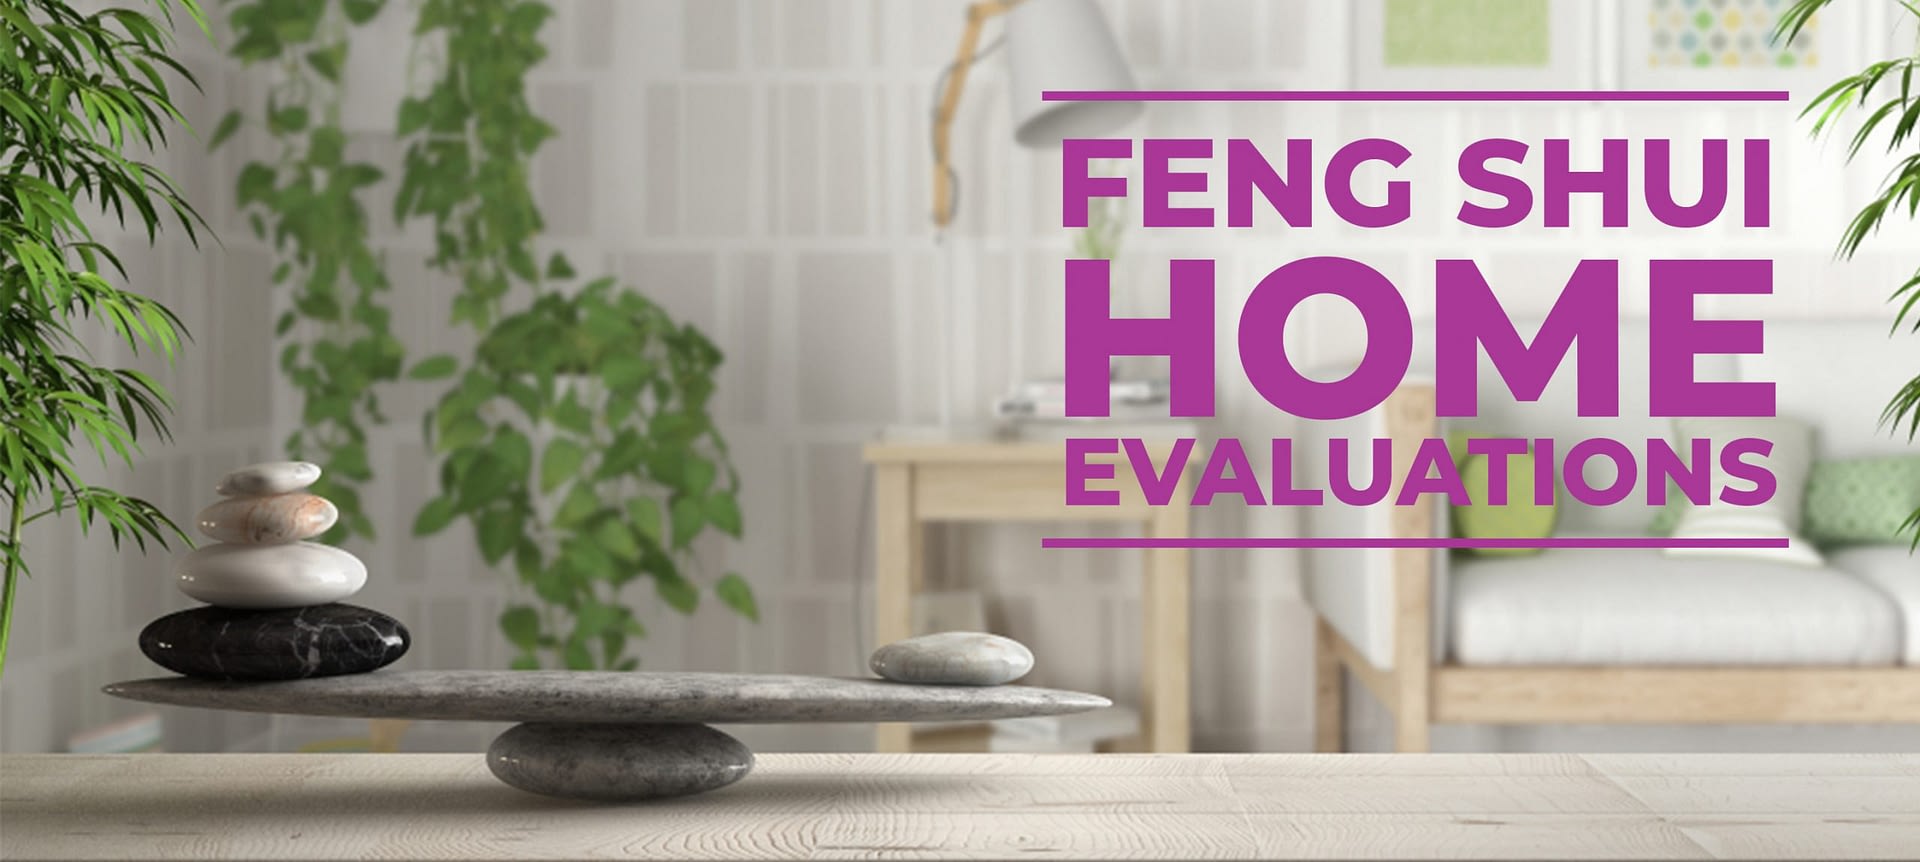 Feng shui home evaluation